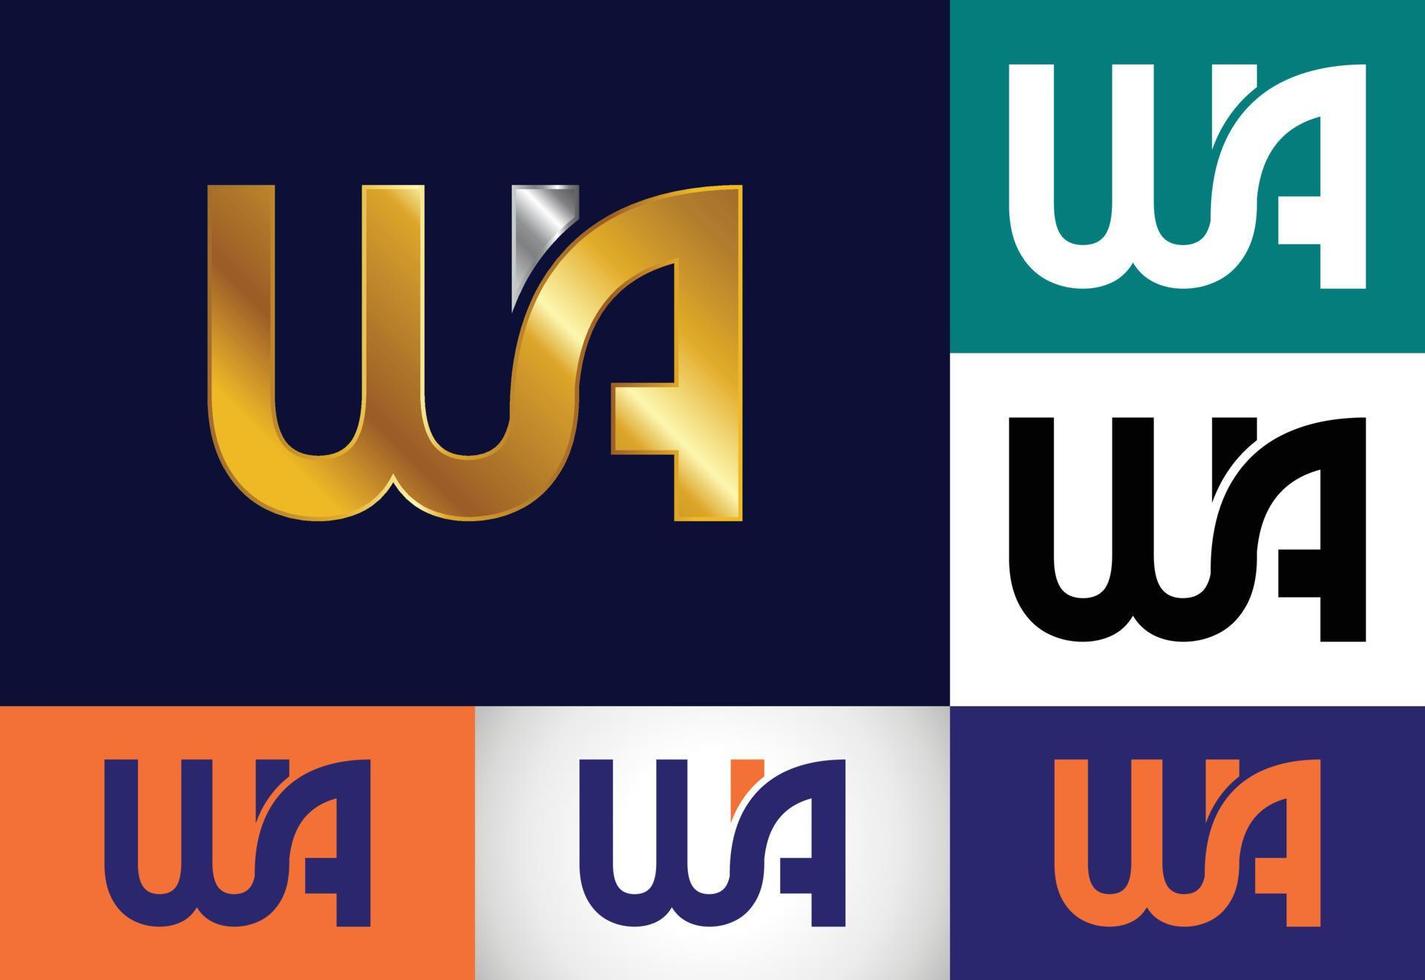 första monogram bokstaven wa logotyp design vektor mall. wa letter logotyp design